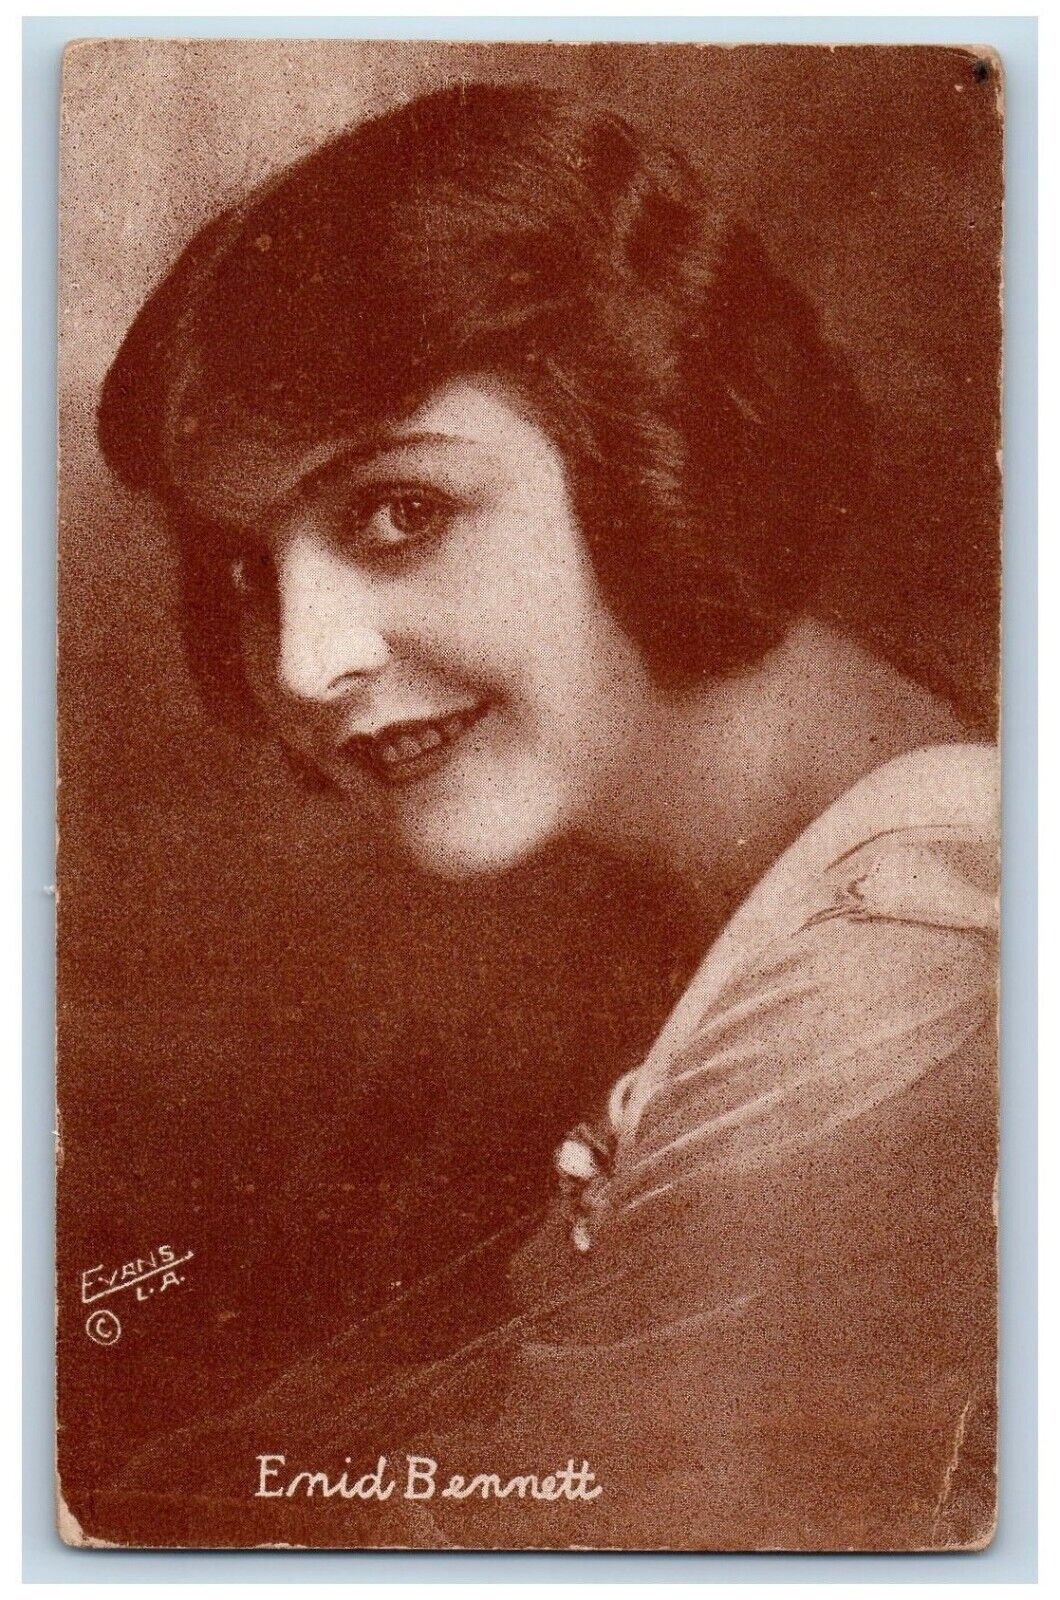 Evans LA Postcard Enid Bennett Australia Film Actress Studio Portrait c1910's